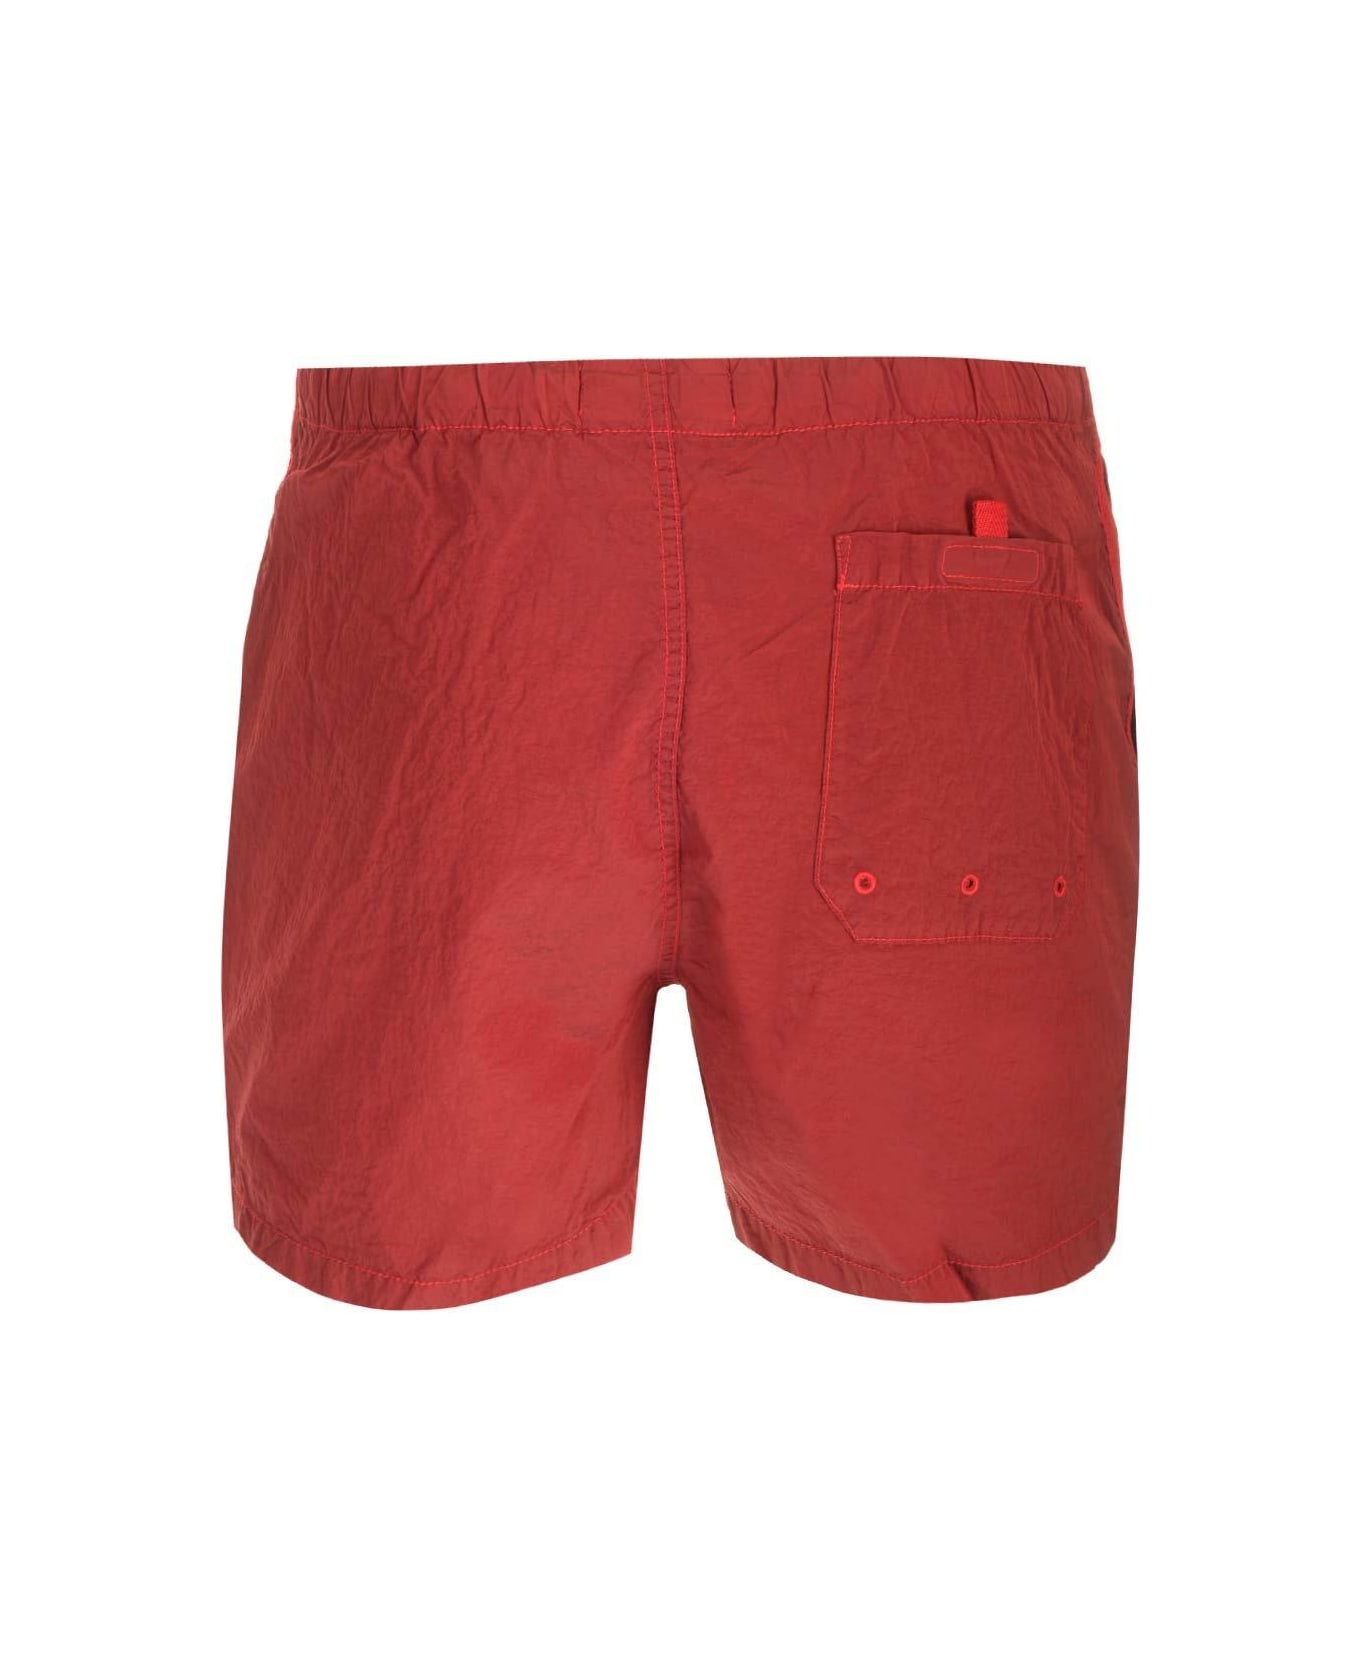 Stone Island Compass Patch Swim Shorts - Red